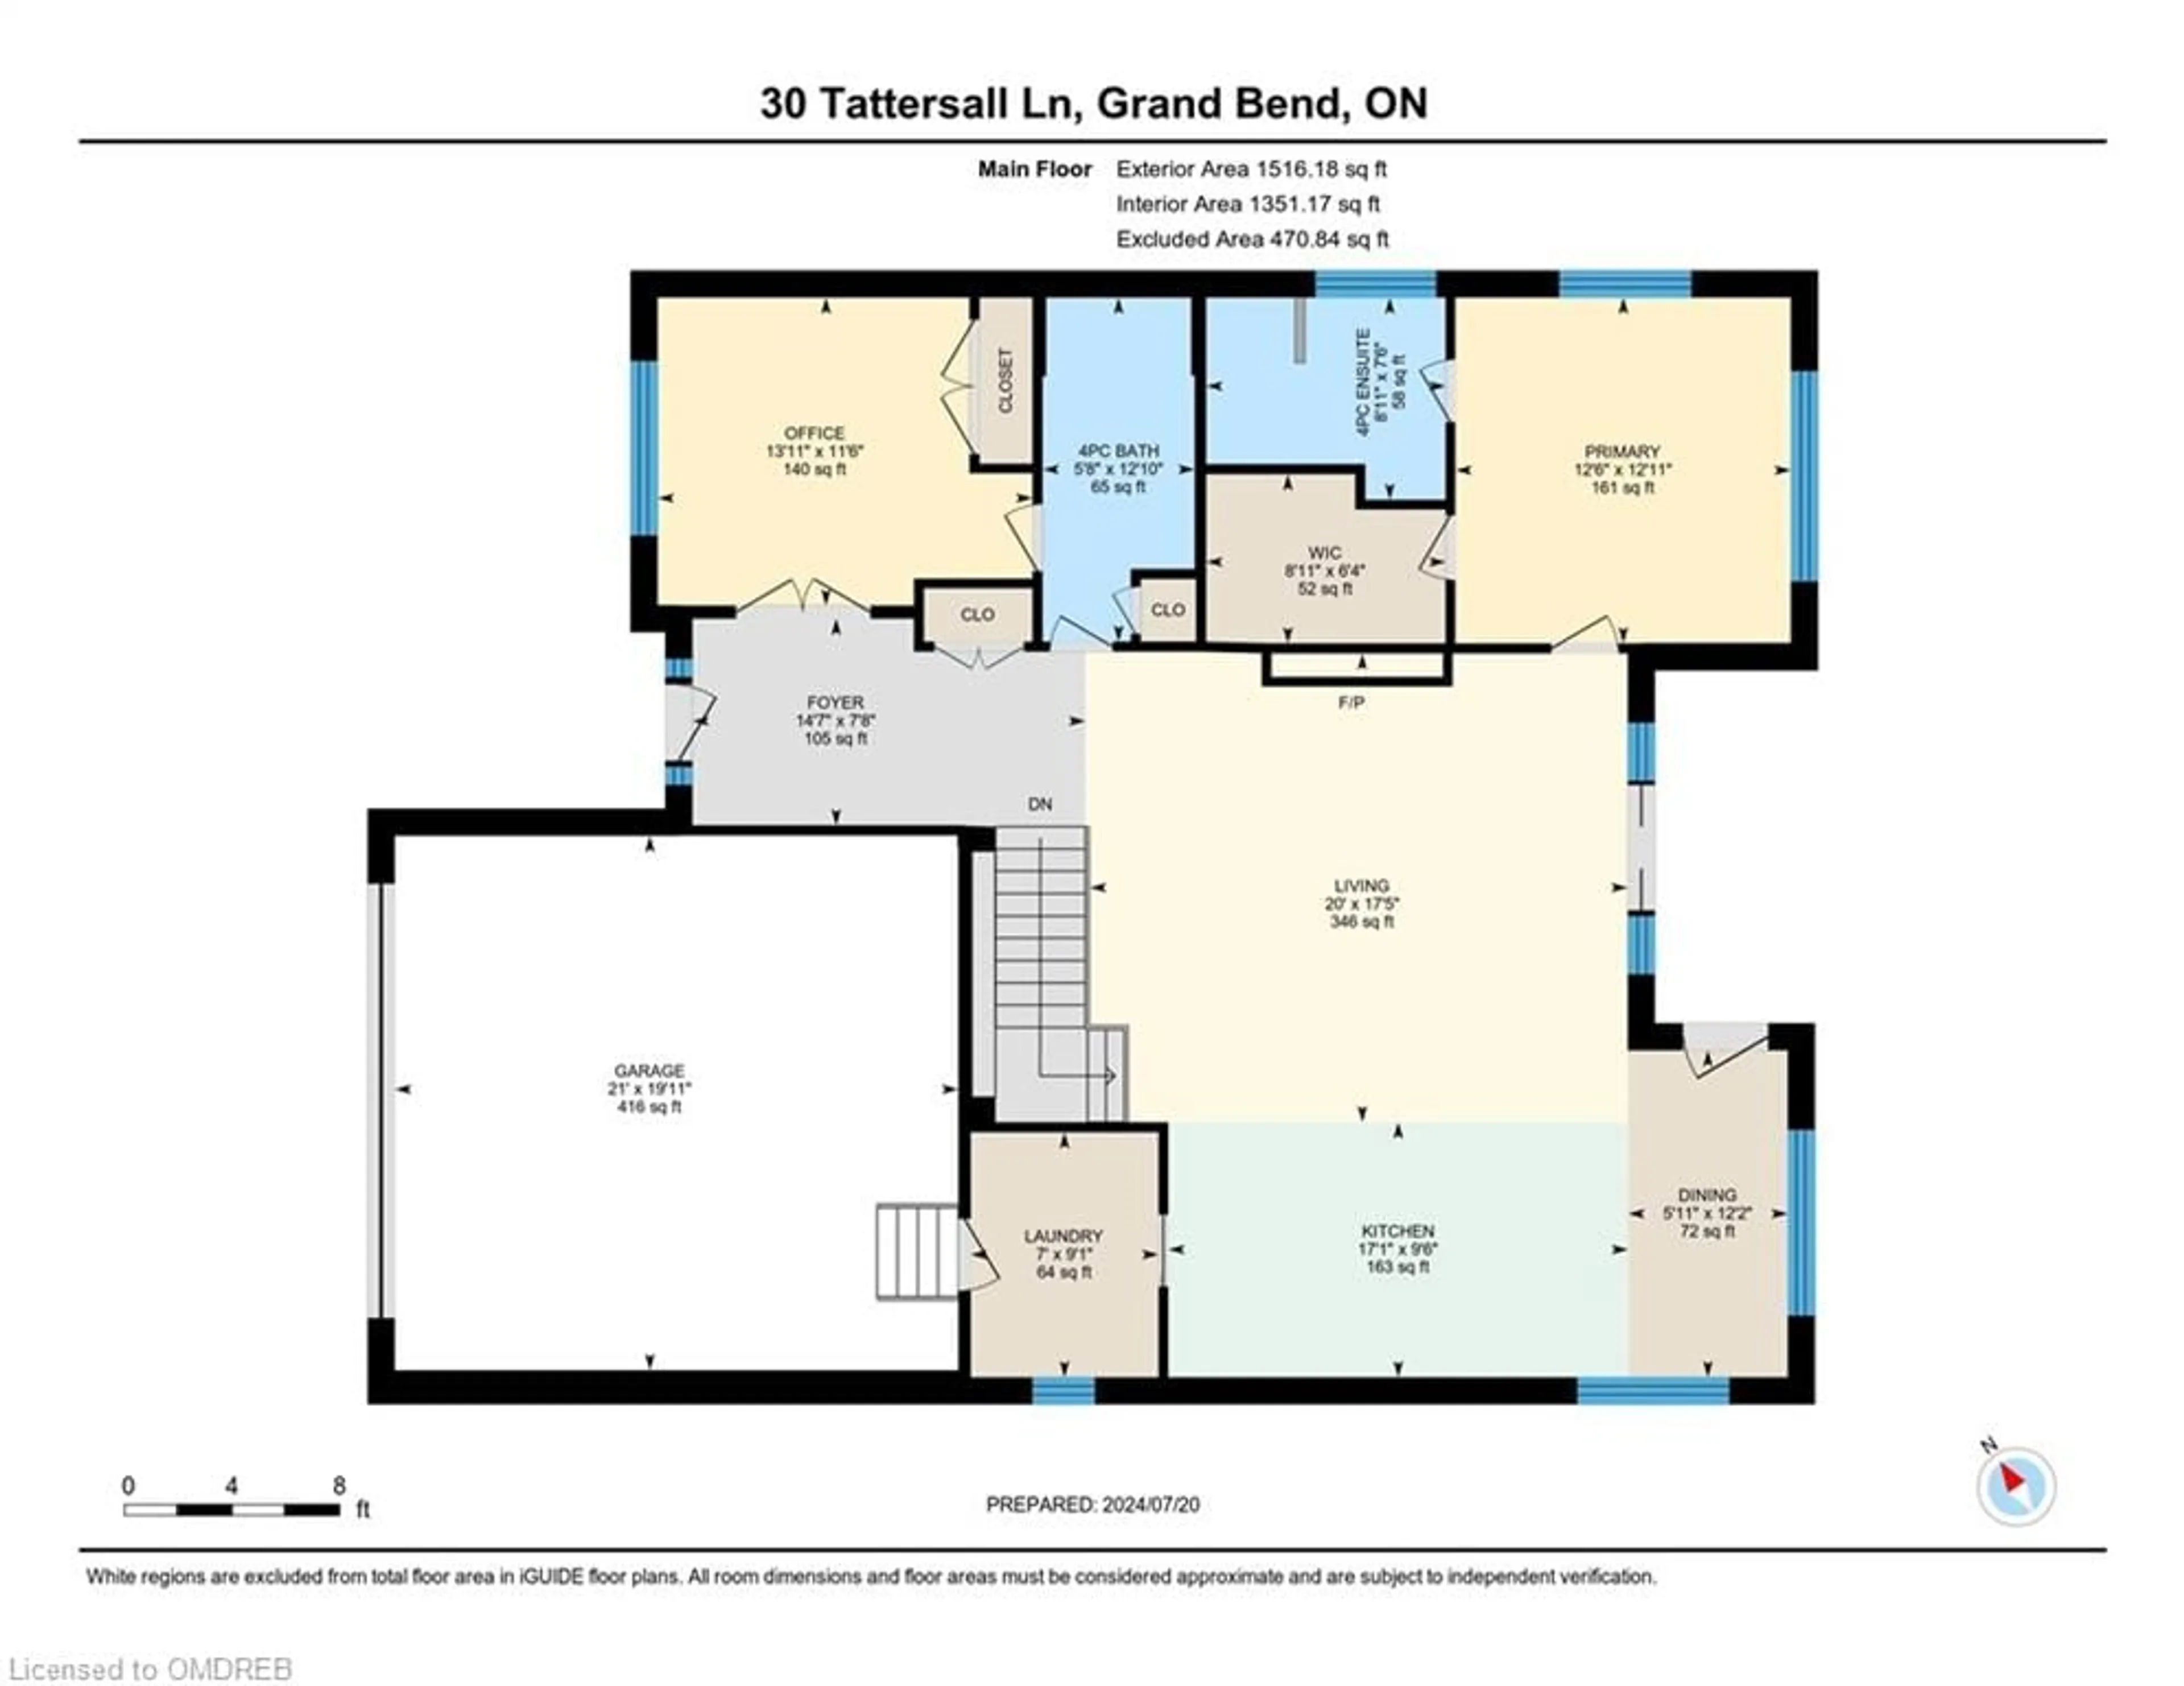 Floor plan for 30 Tattersall Lane, Grand Bend Ontario N0M 1T0